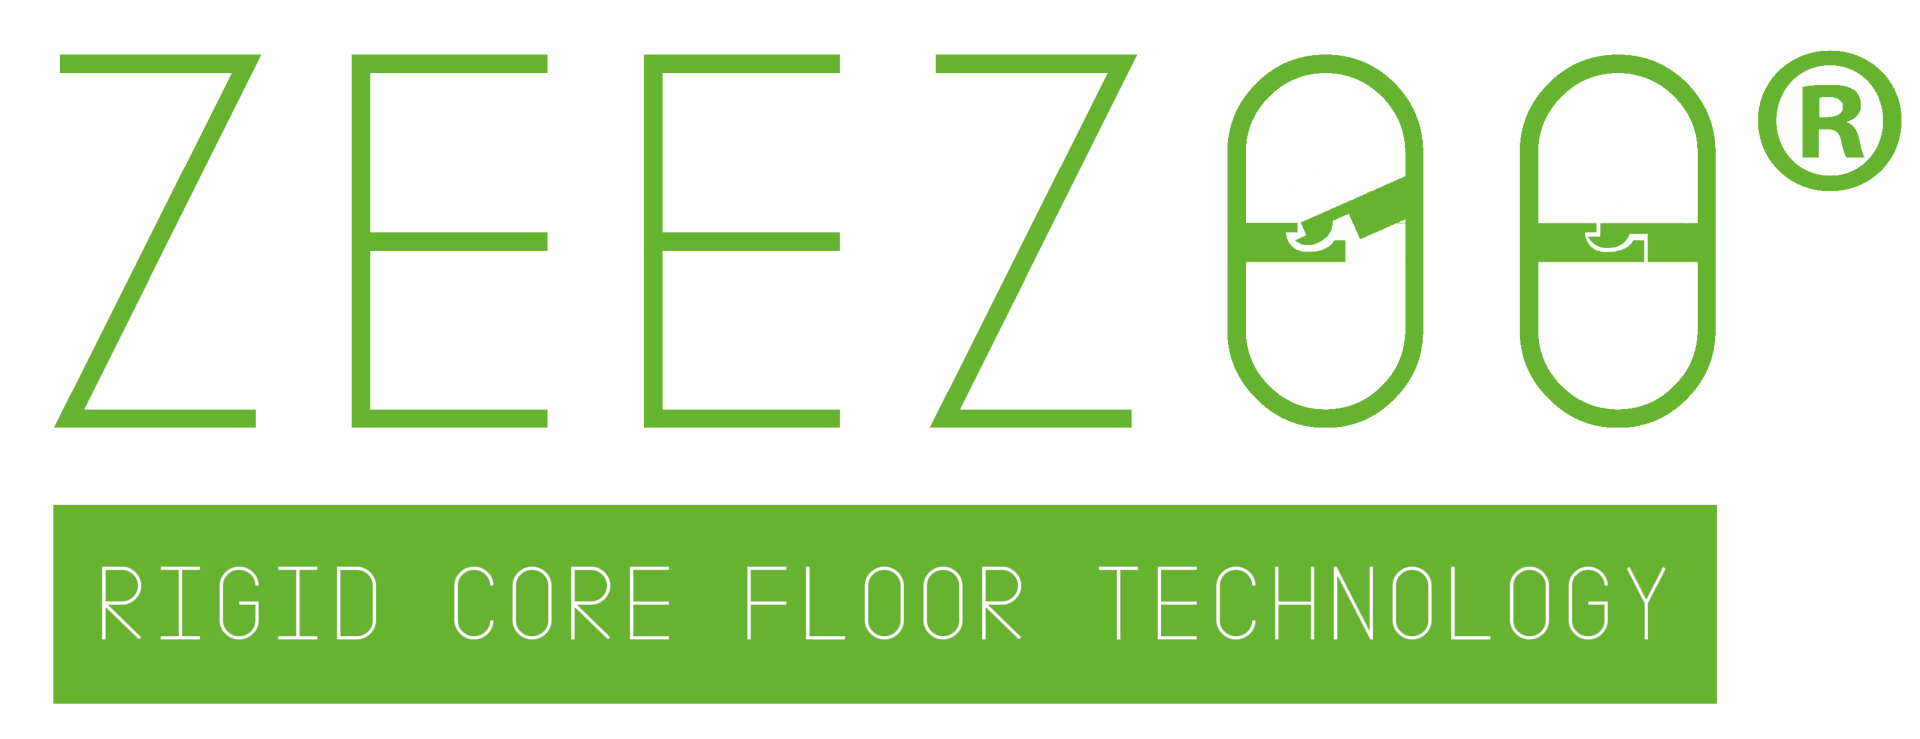 Zeezoo Rigid Core click vinyl flooring - 10 boxes - Image 2 of 2